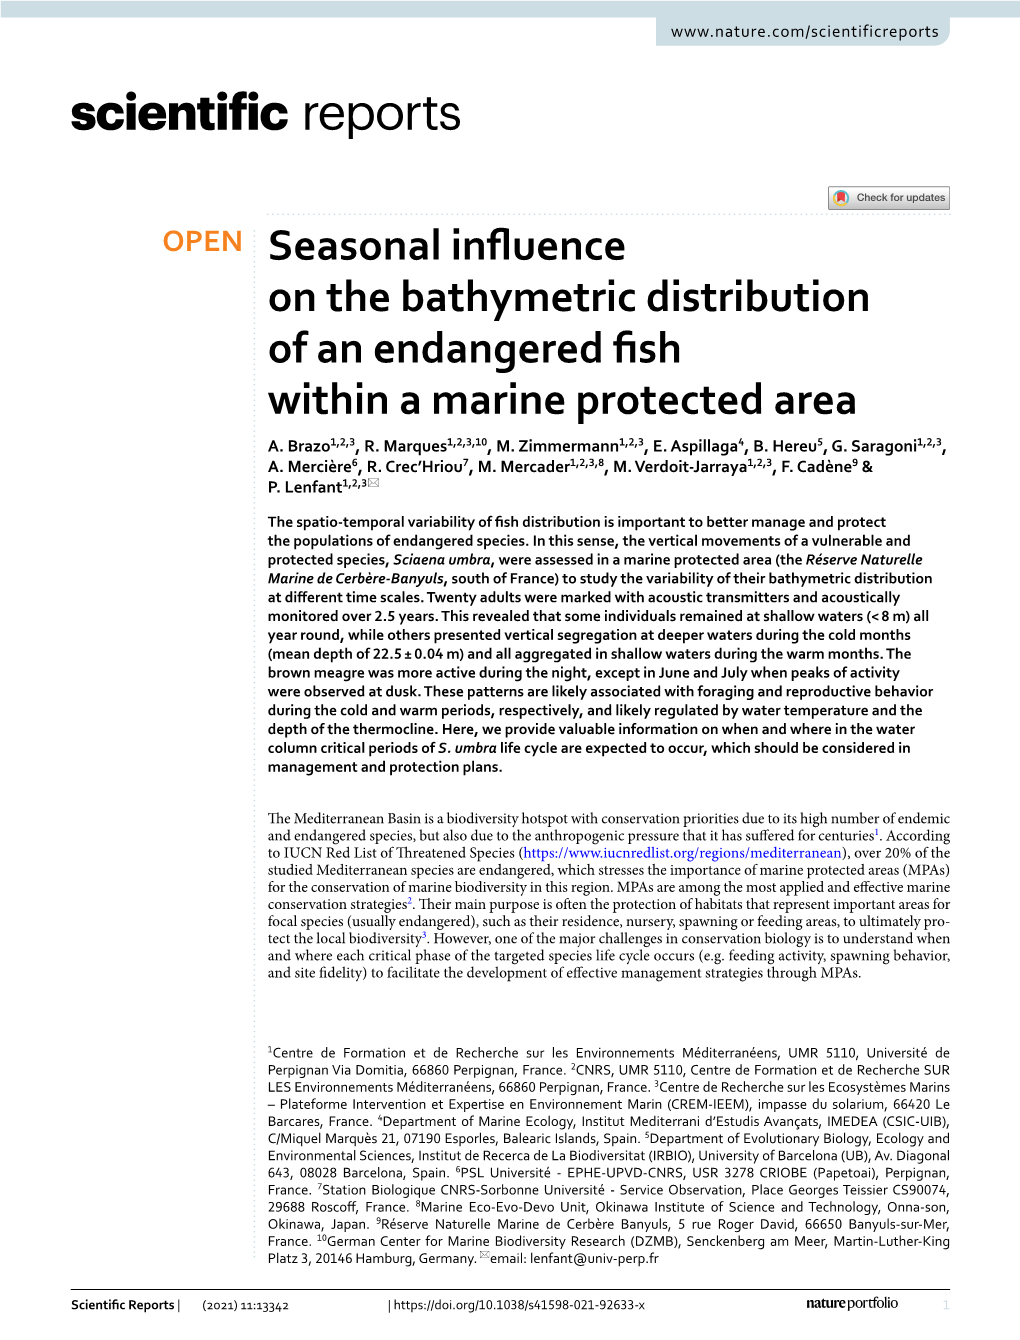 Seasonal Influence on the Bathymetric Distribution of an Endangered Fish